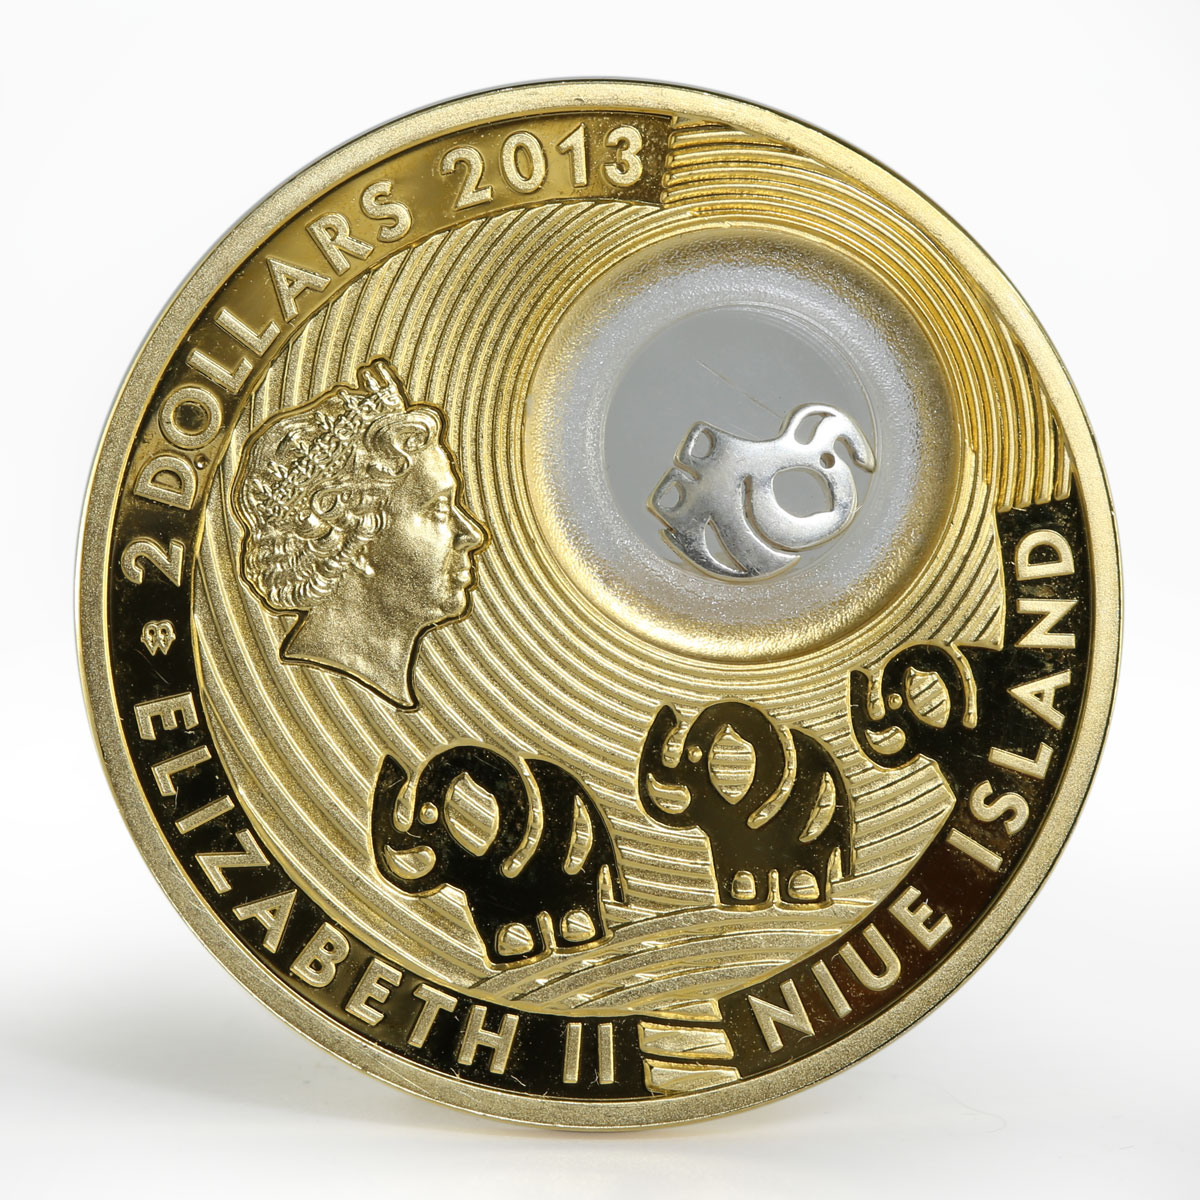 Niue 2 dollars Good Luck Elephant gilded silver coin 2013